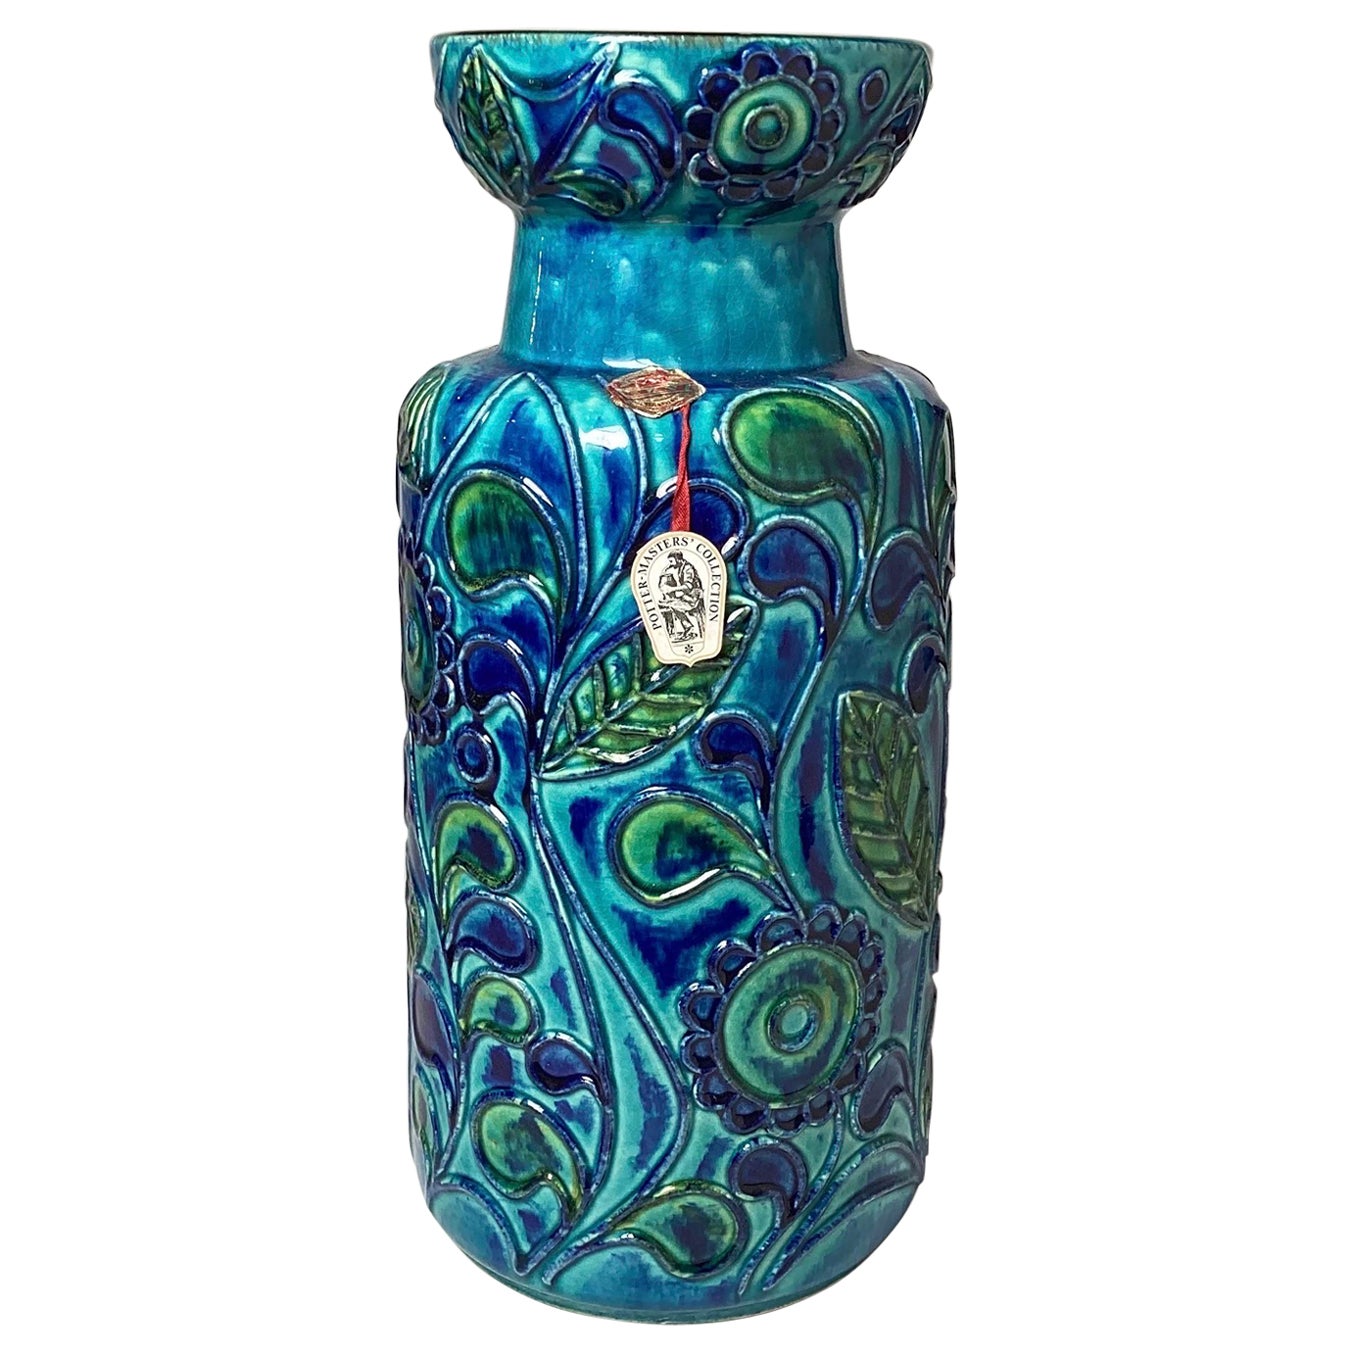 A vibrant Blue Mid Century Modern Ceramic Vase by Bay Keramik